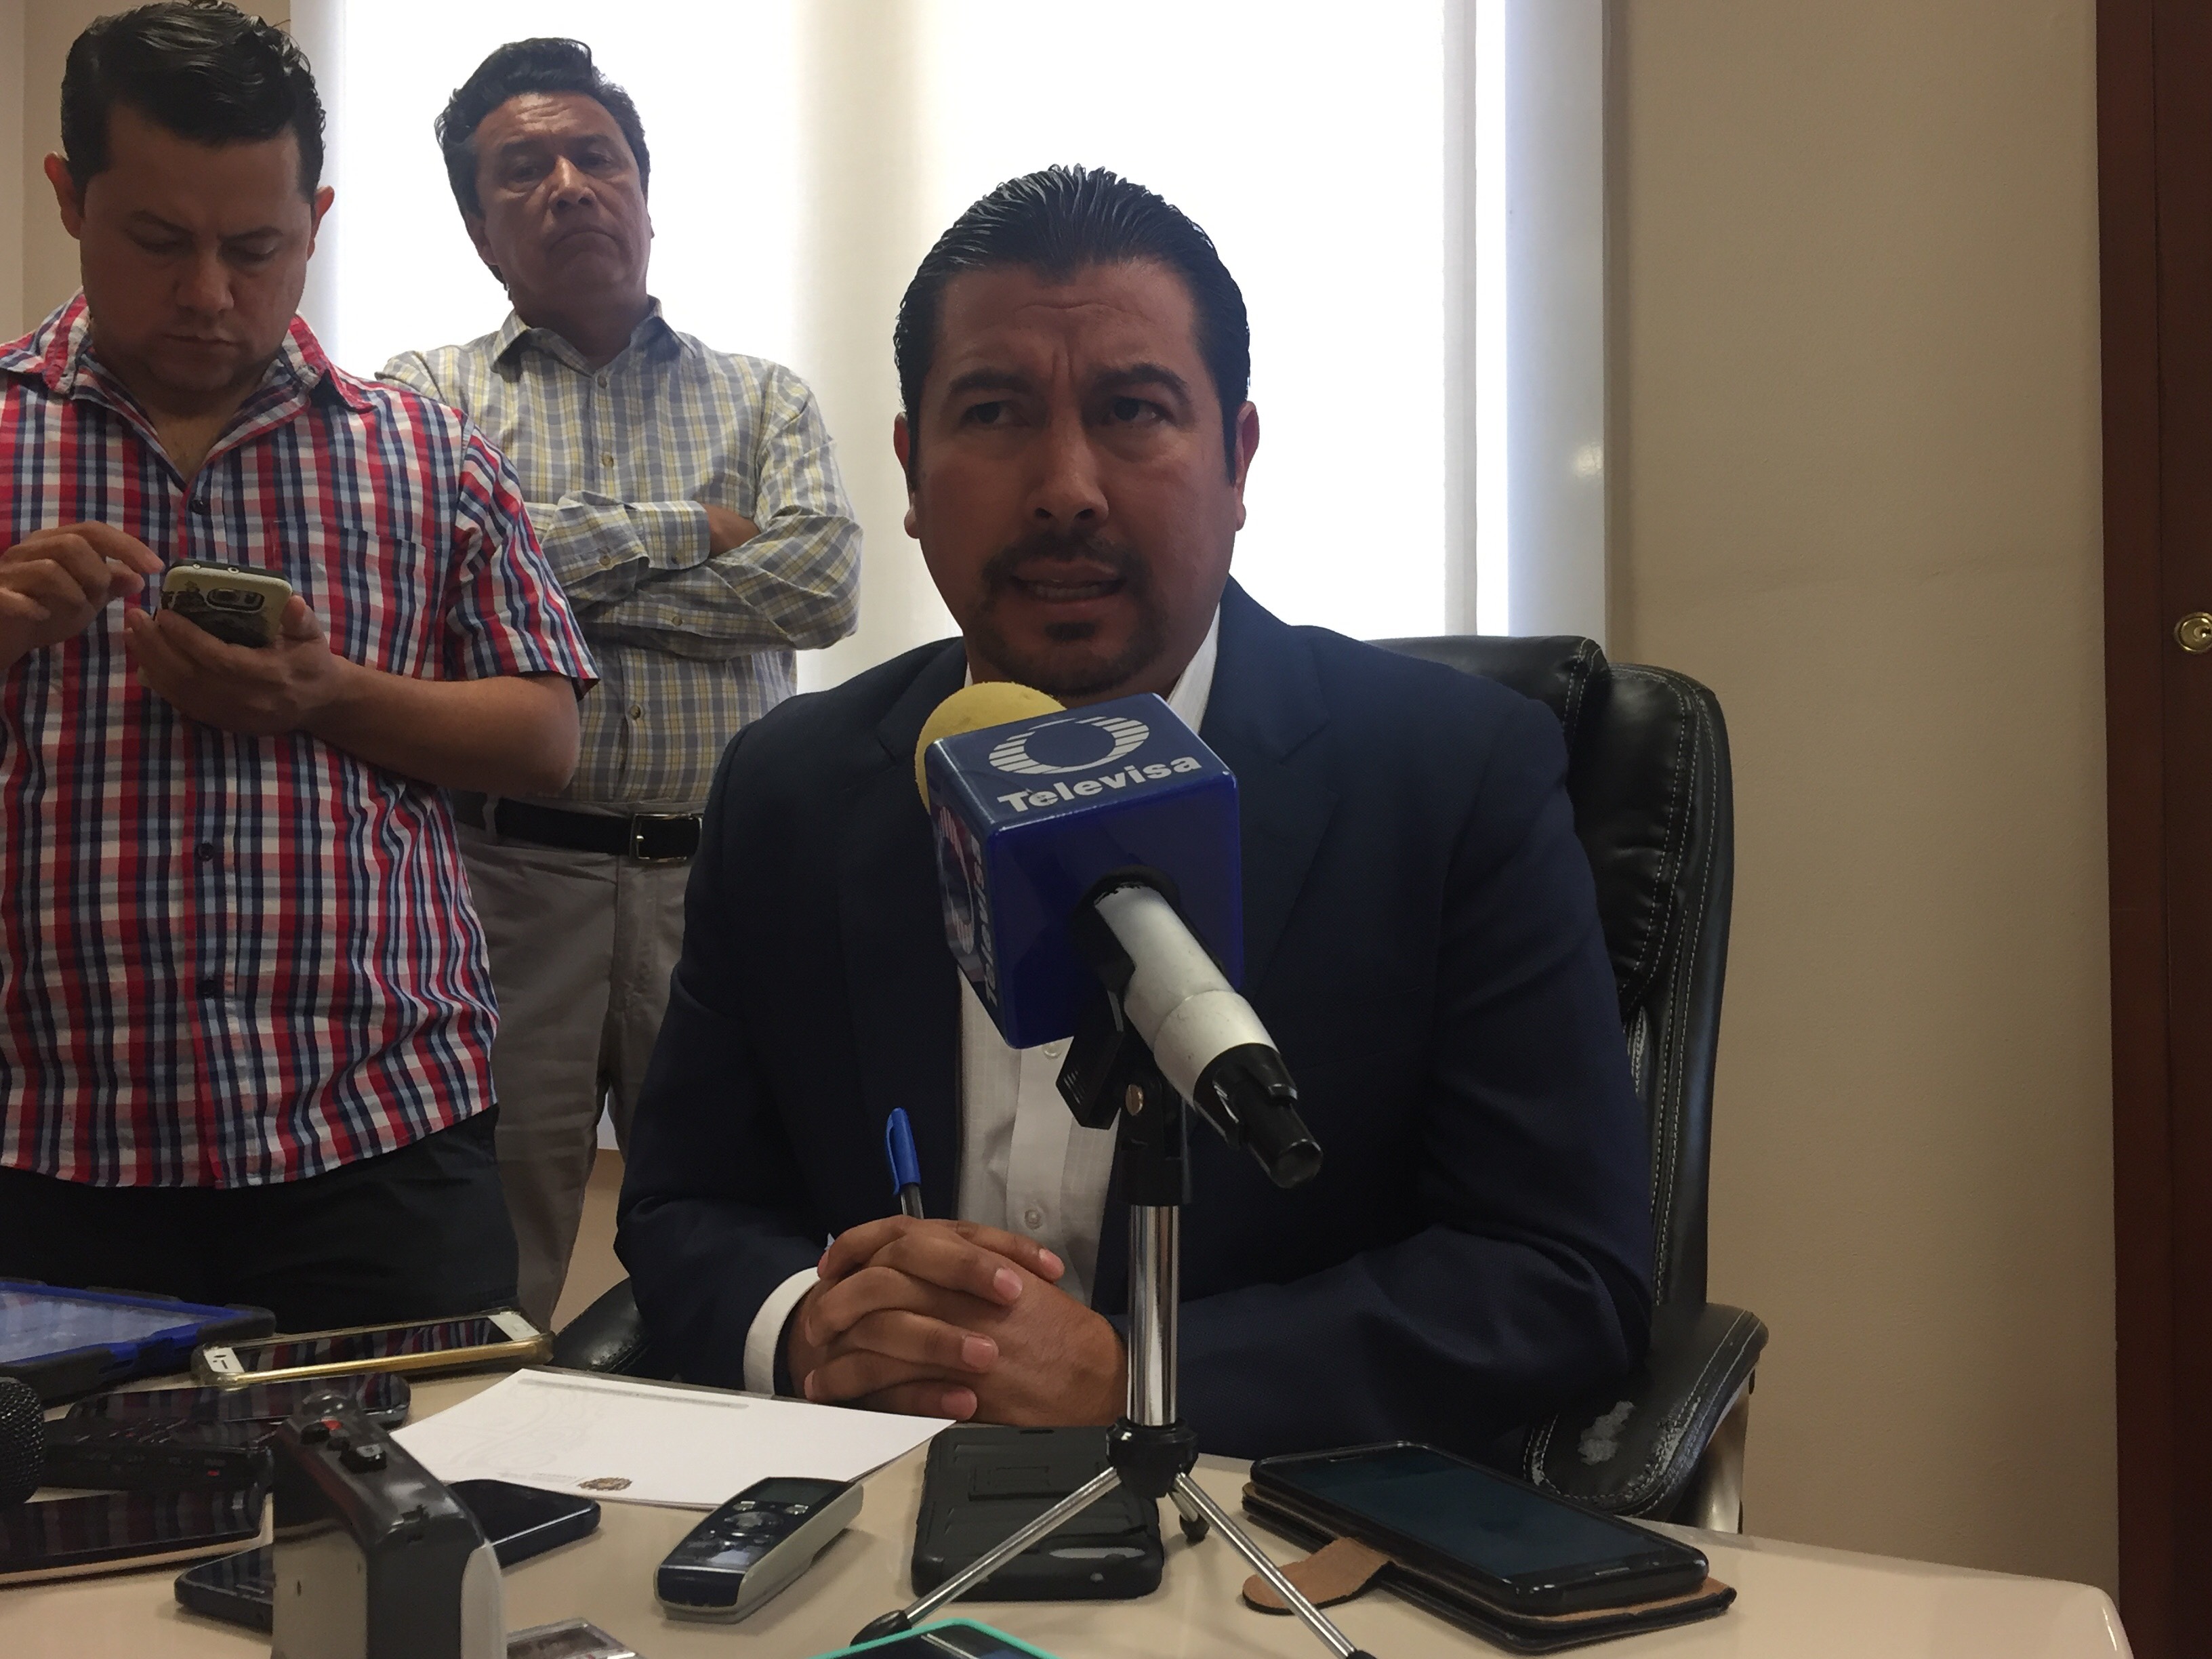  No hay razón para rescindir relación laboral con Hugo Serrano Martínez: Municipio de Querétaro